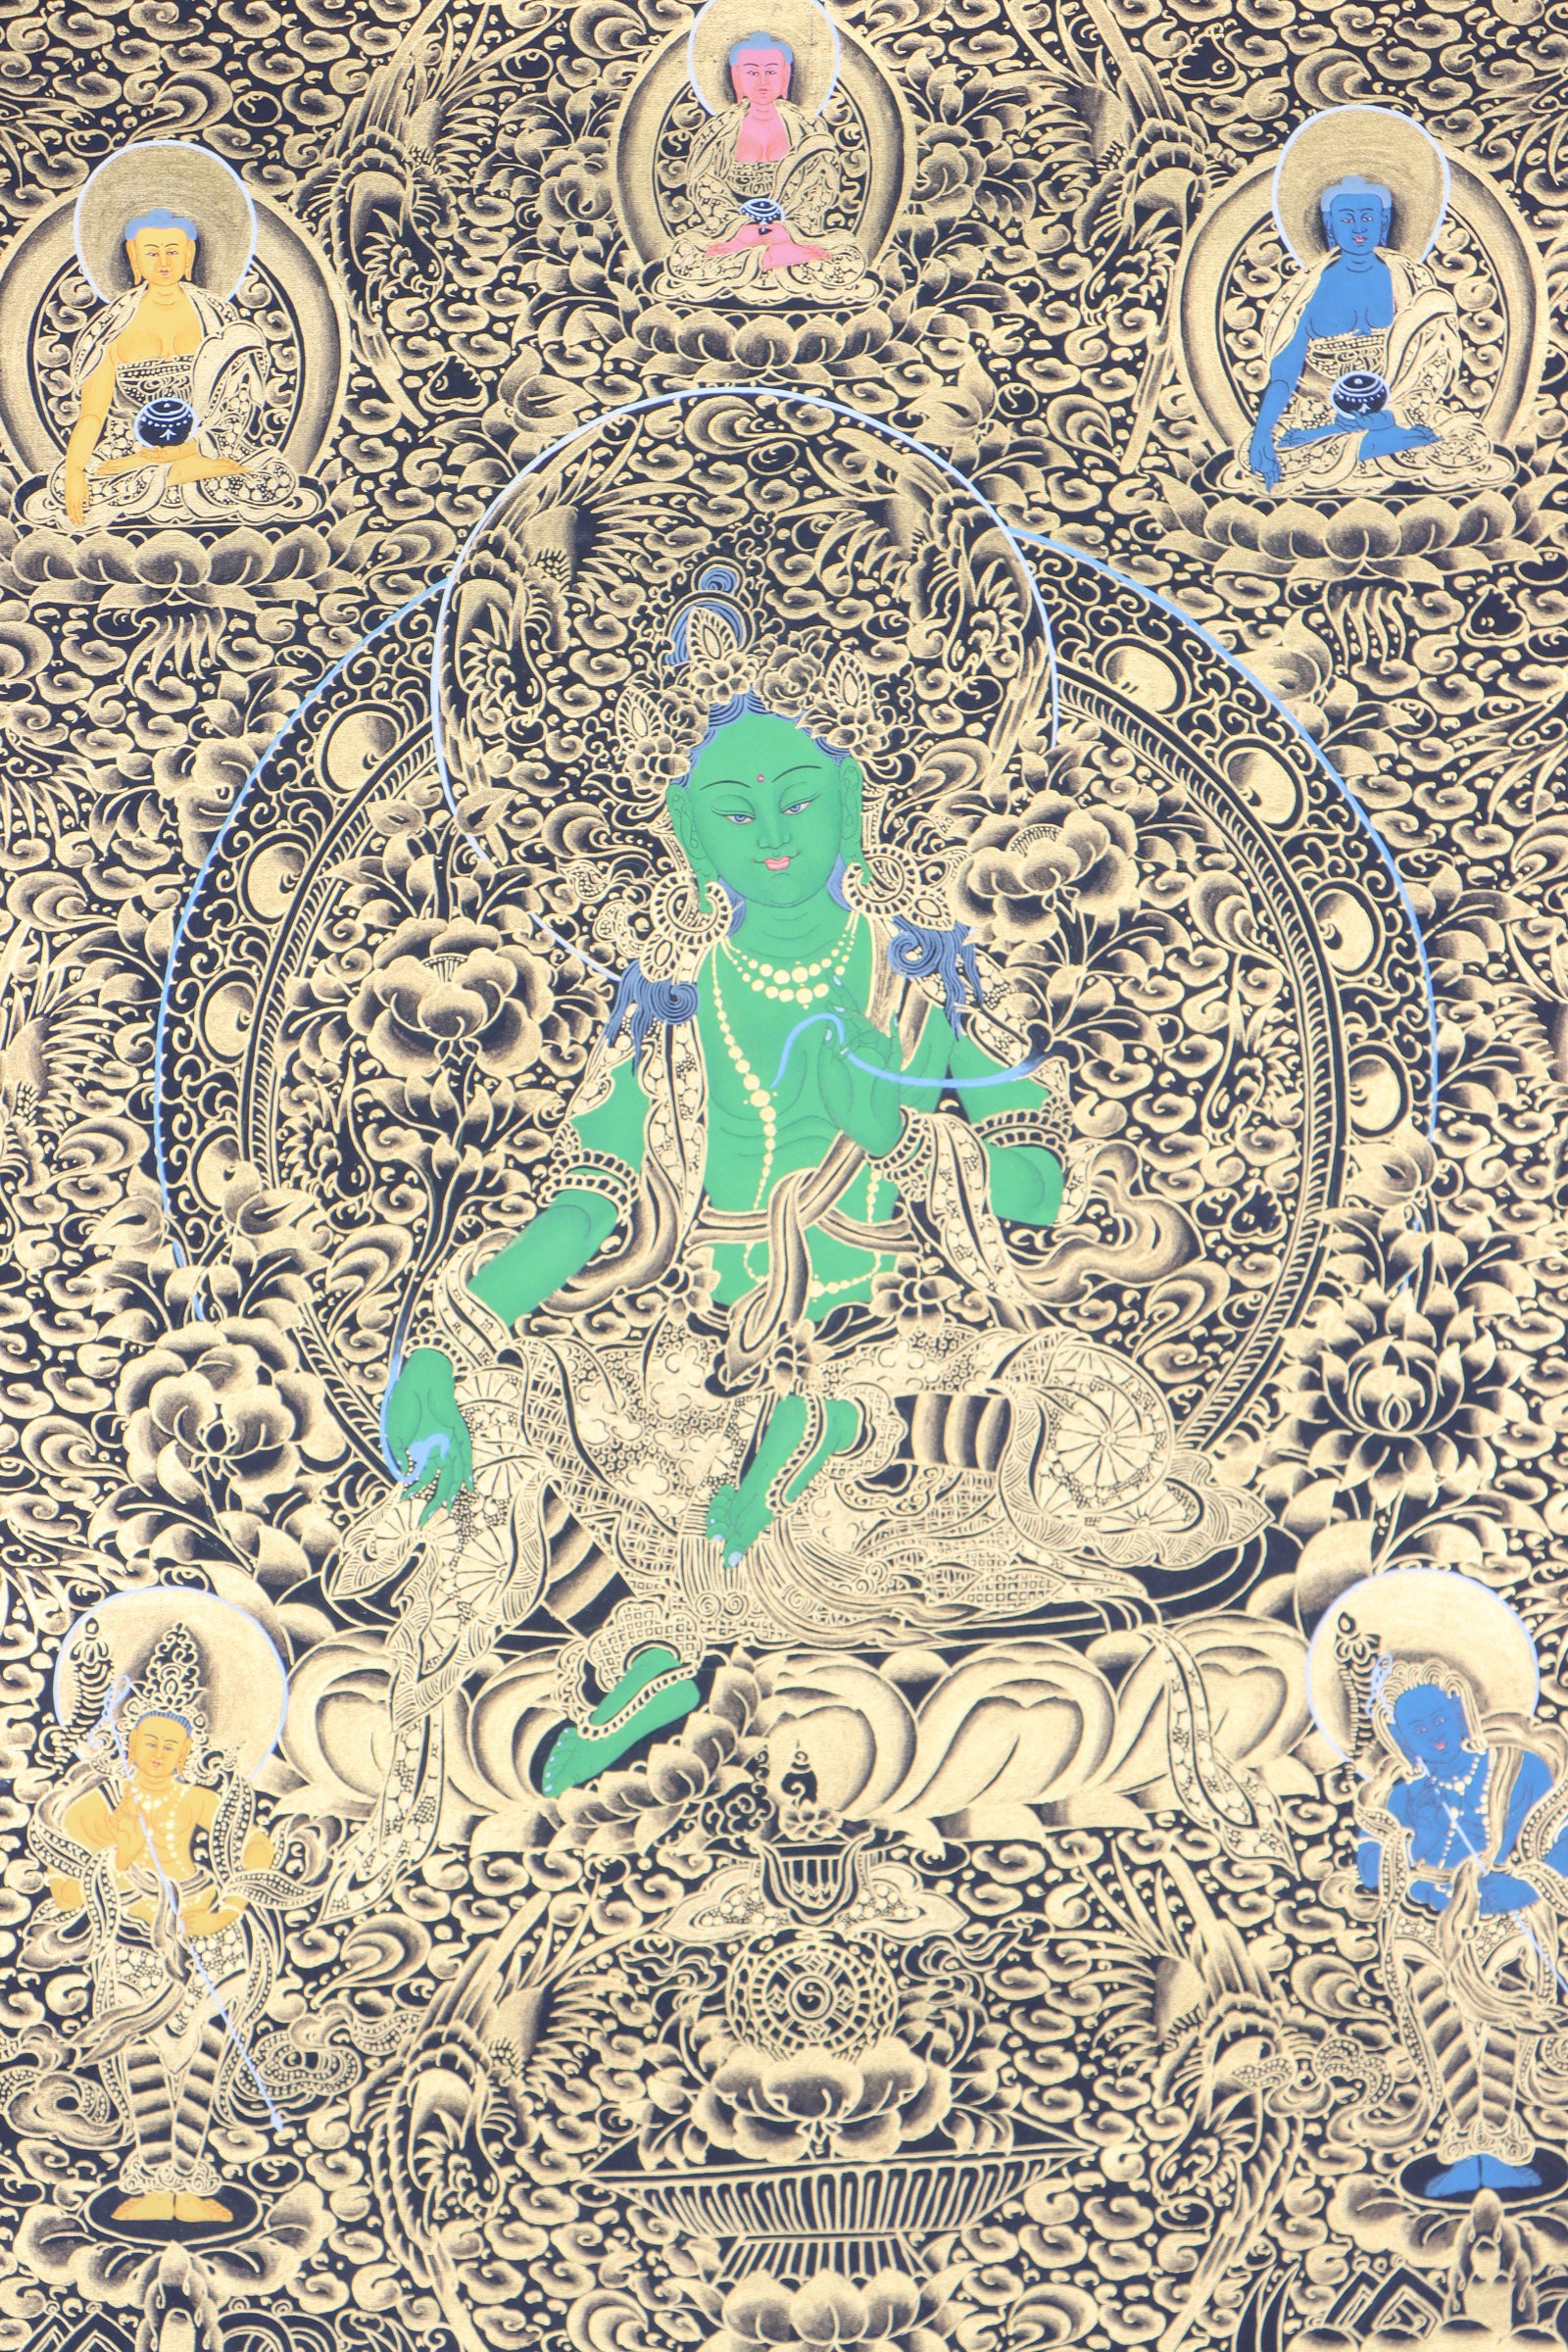 Green Tara Thangka Painting for meditation and devotion.